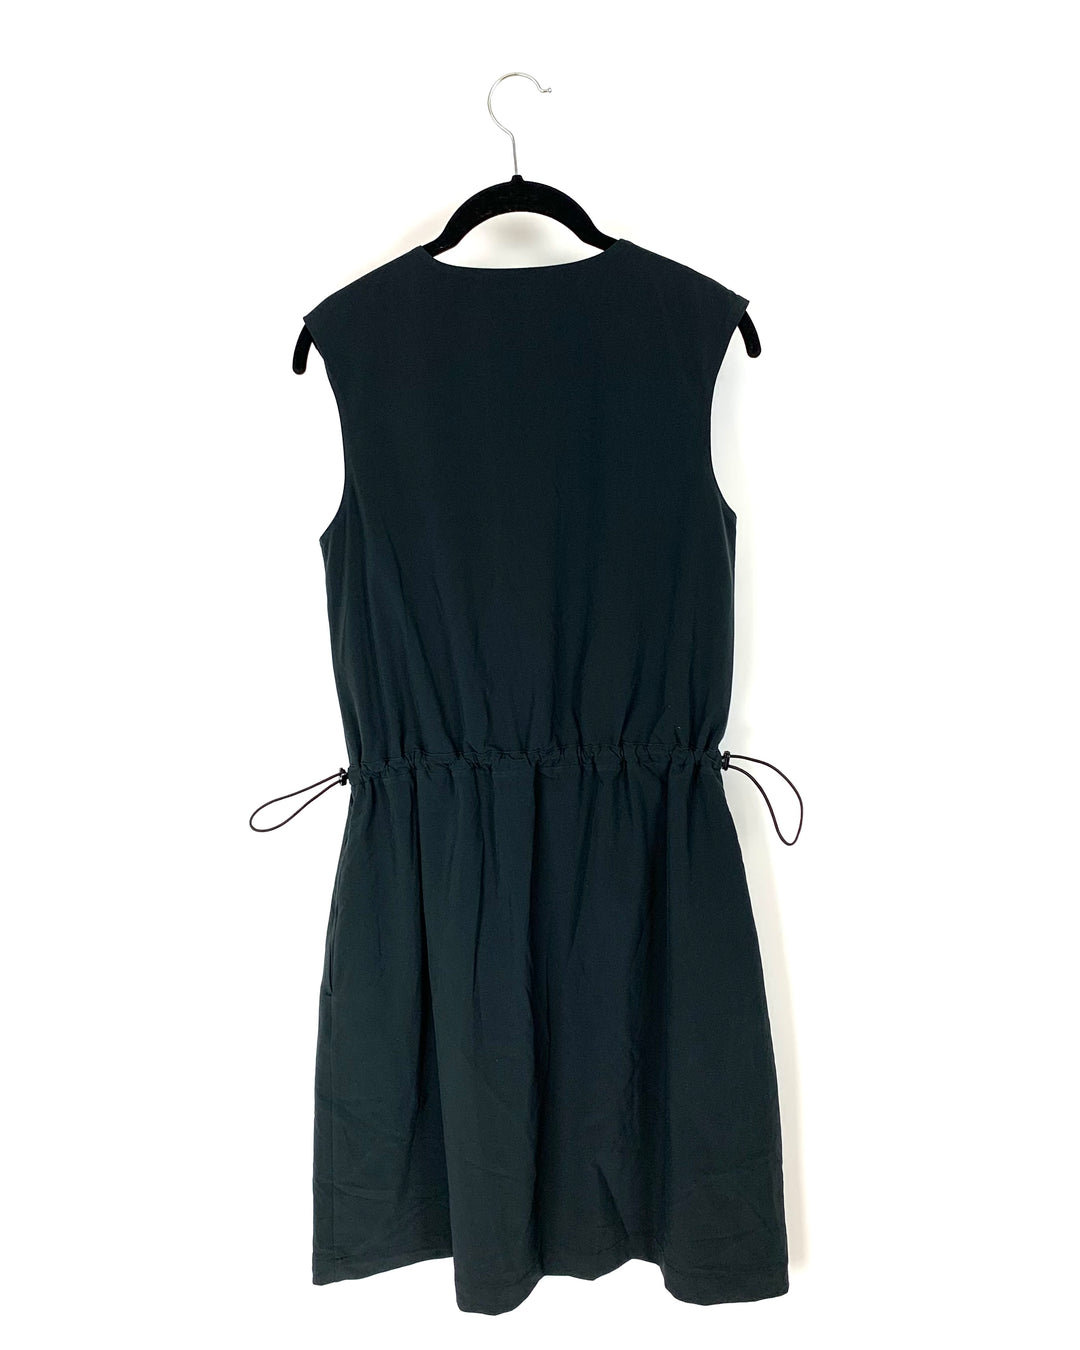 Black Sleeveless Drawstring Dress - Small